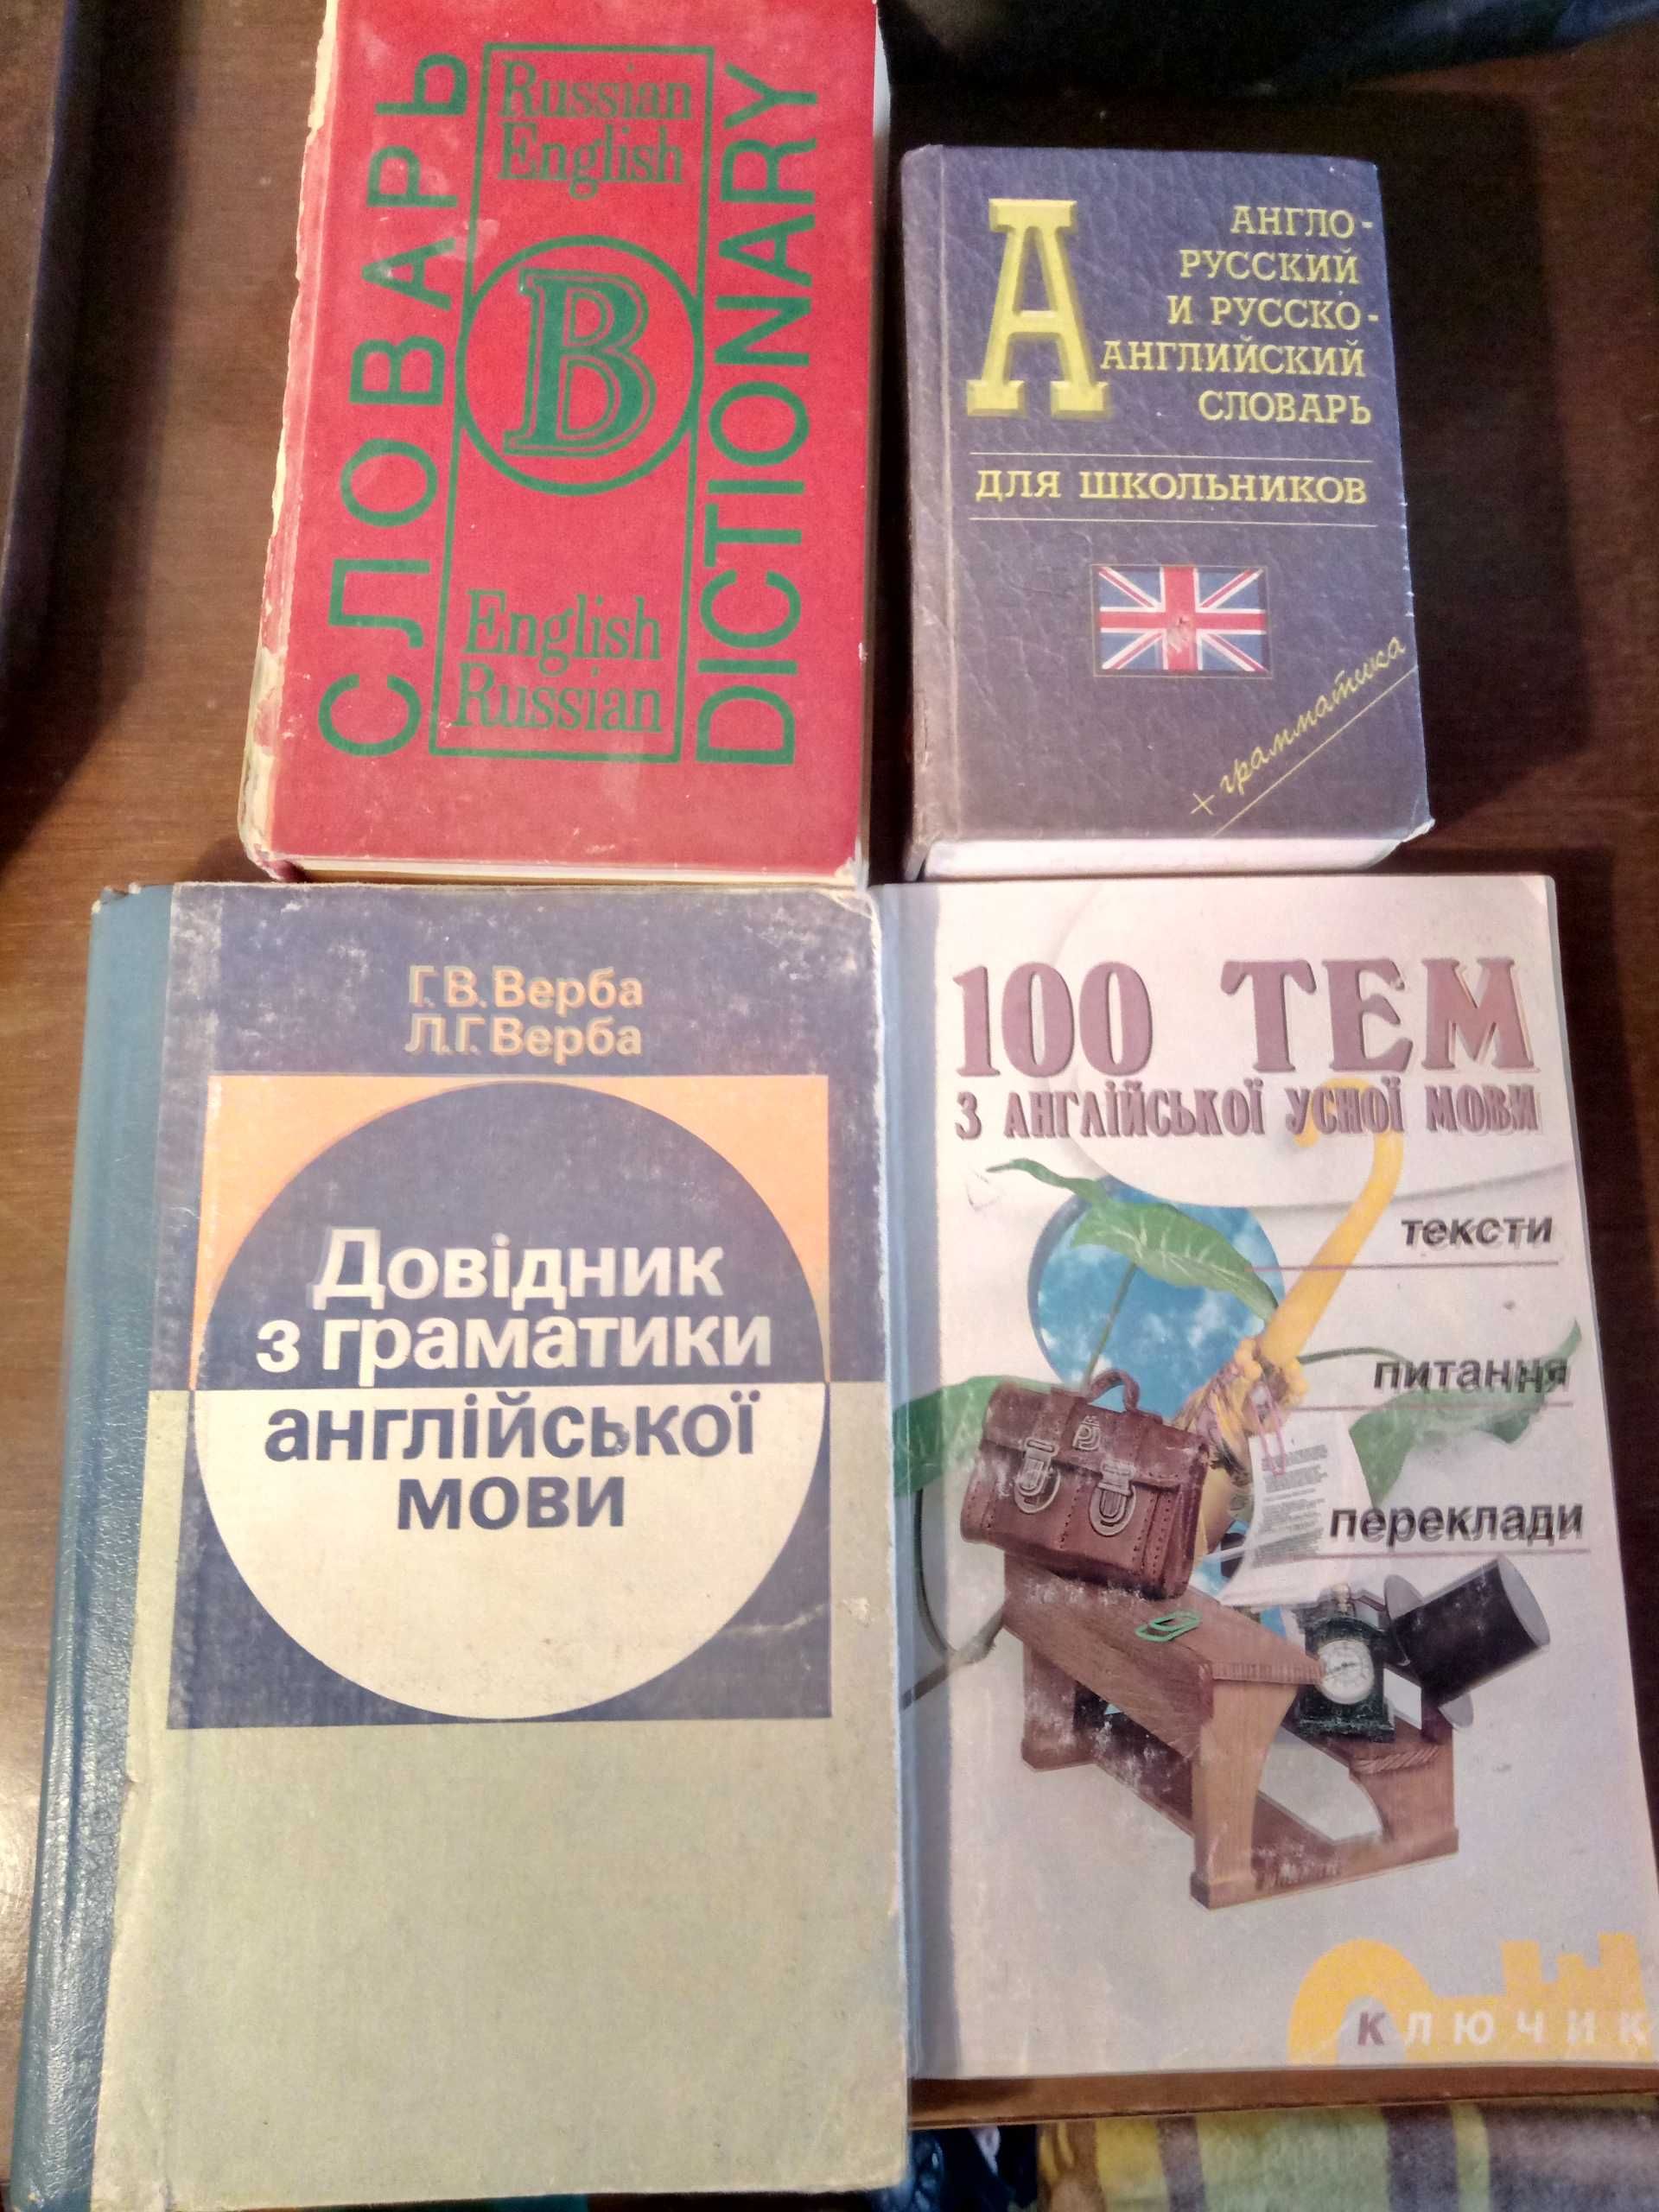 Словари русско-украинские, русско-англ. грамматика, учебники